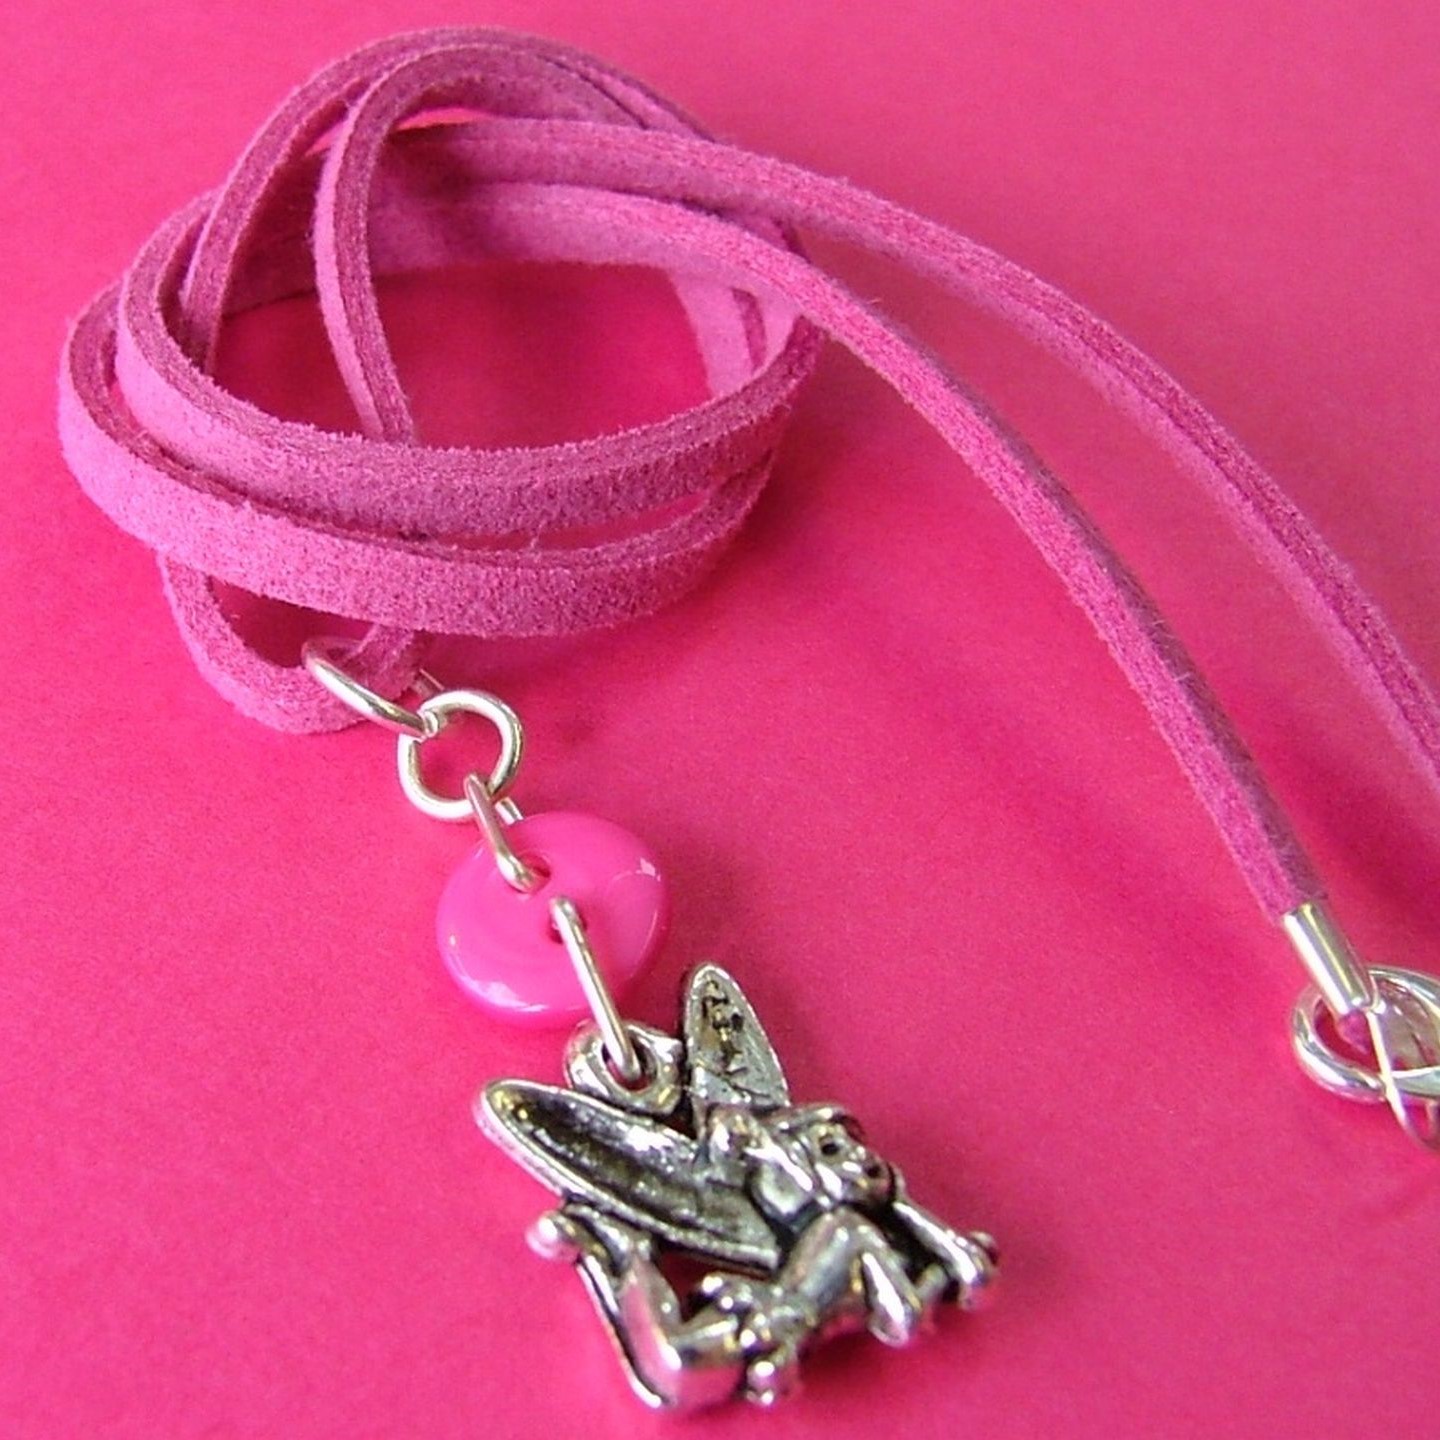 Garden Fairy Child’s Button Charm Necklace